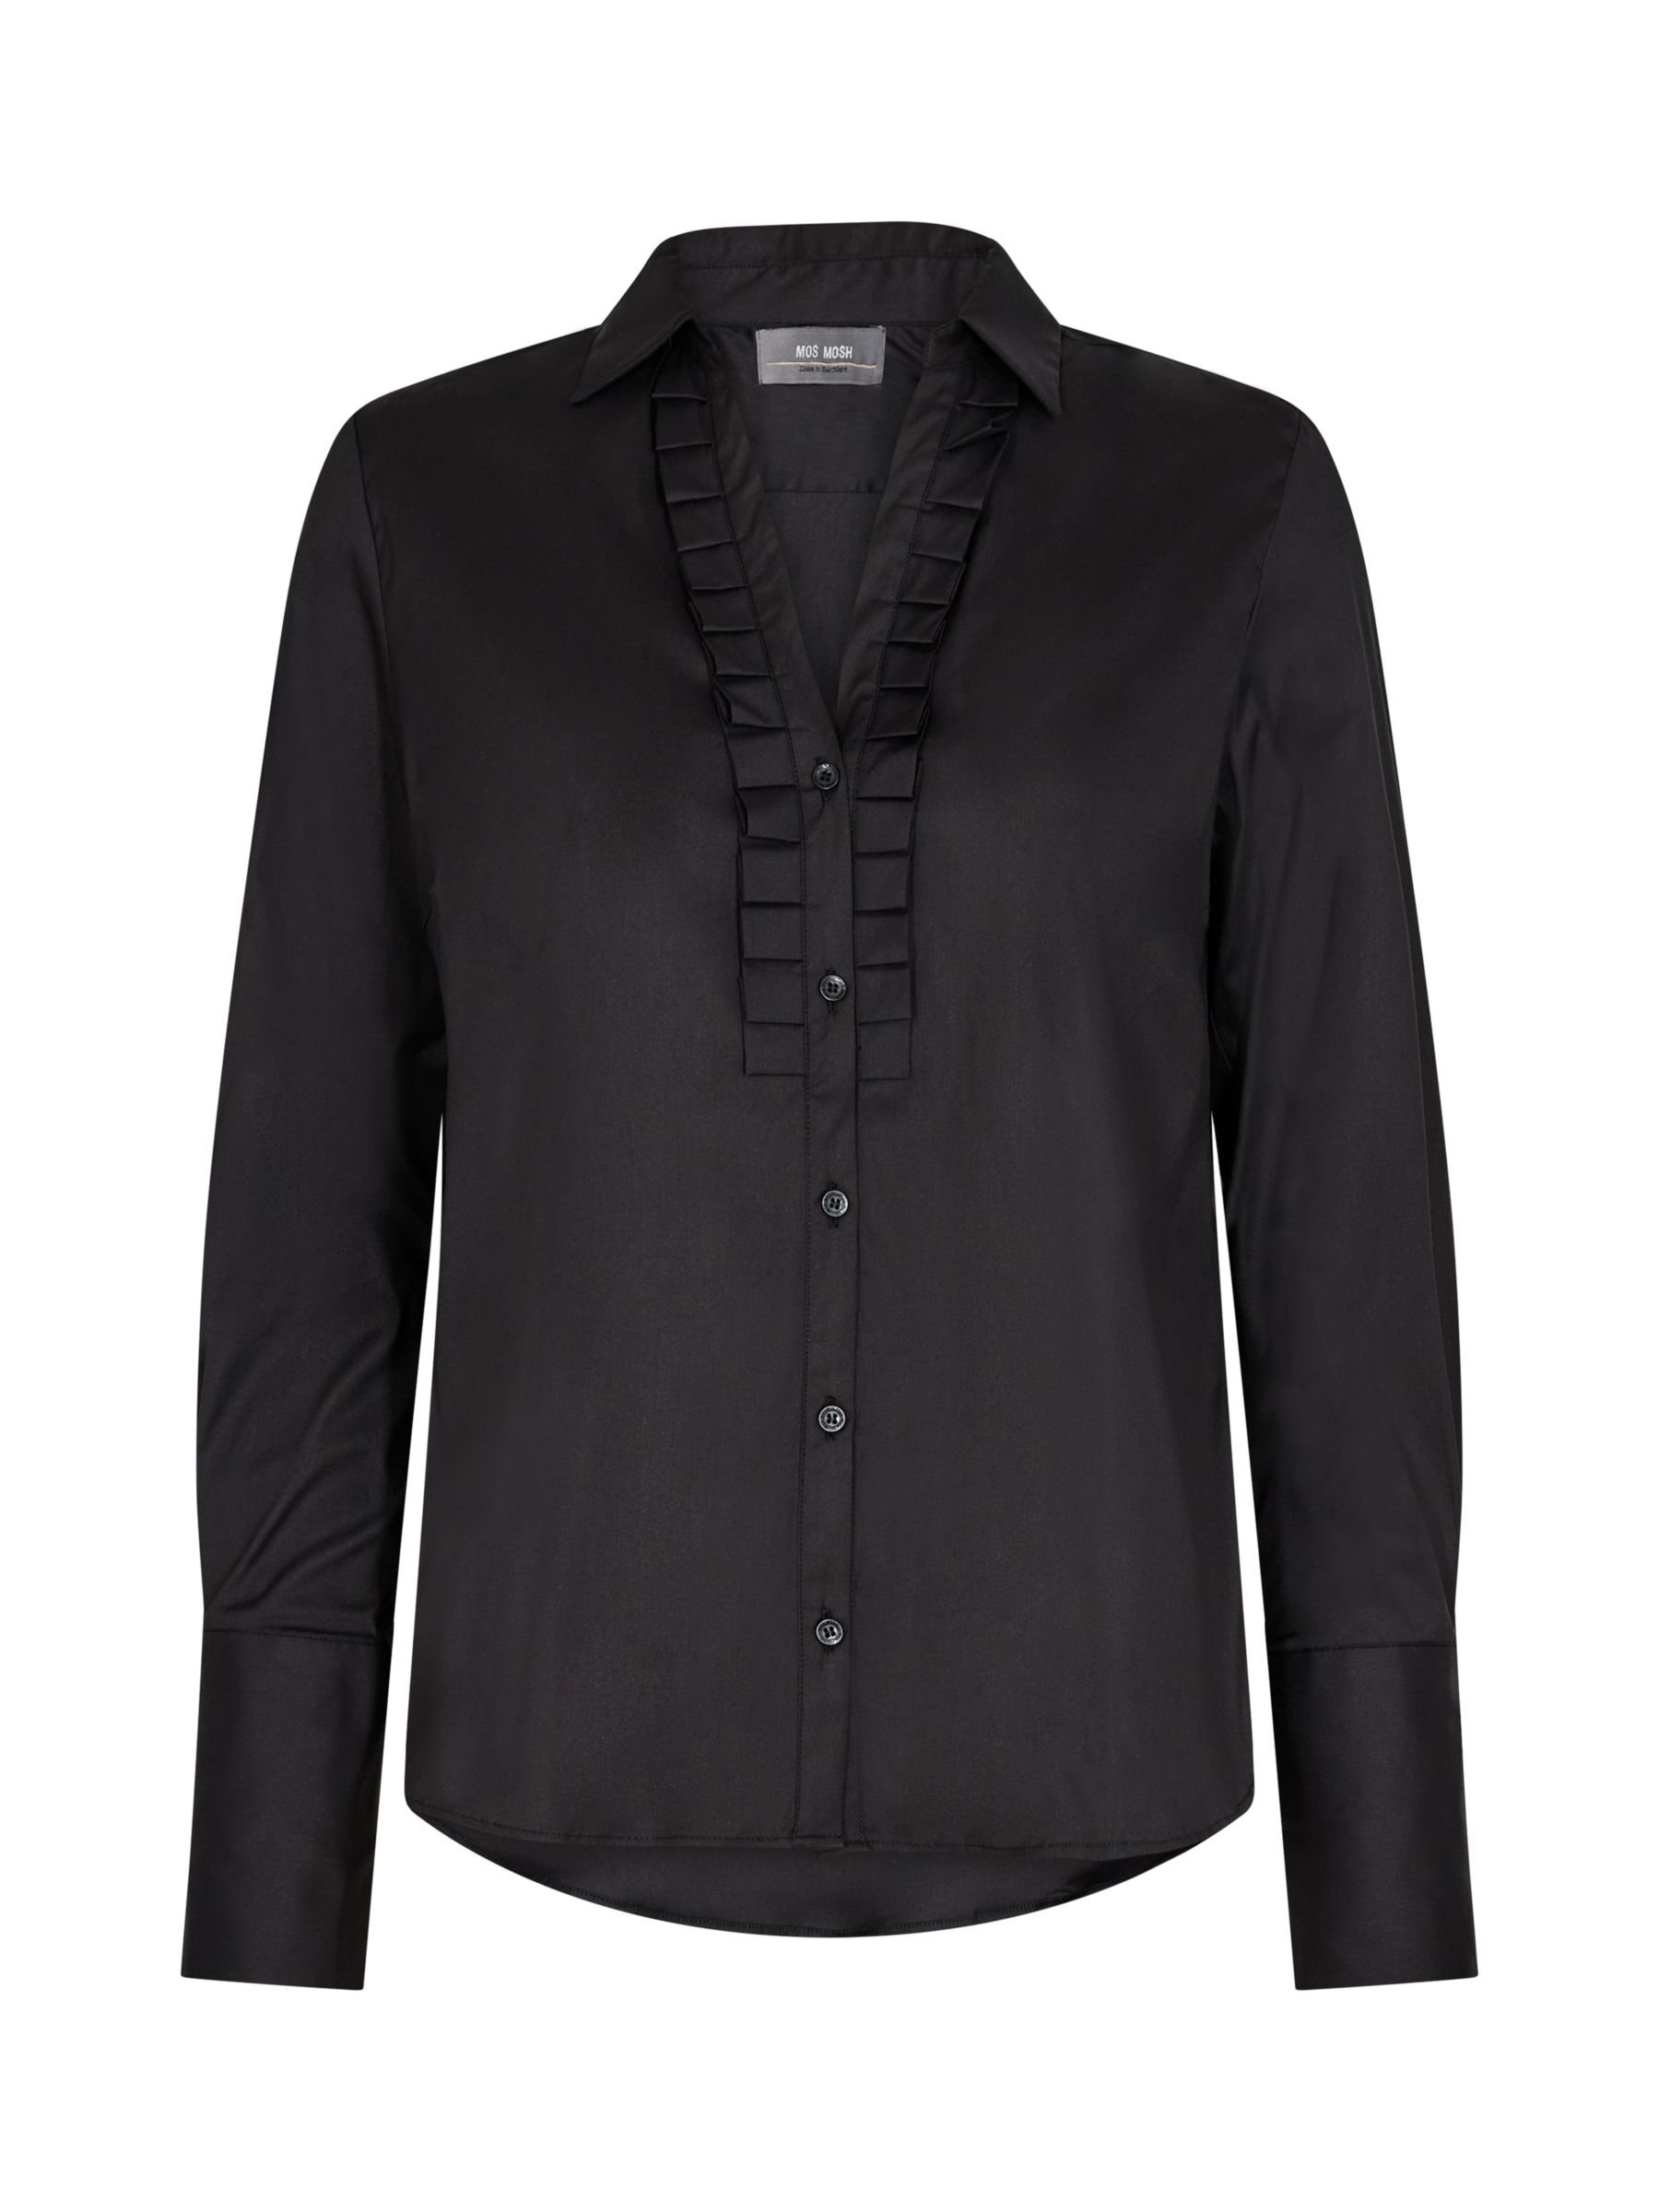 MOS MOSH Sybel Long Sleeve Ruffle Shirt, Black at John Lewis & Partners